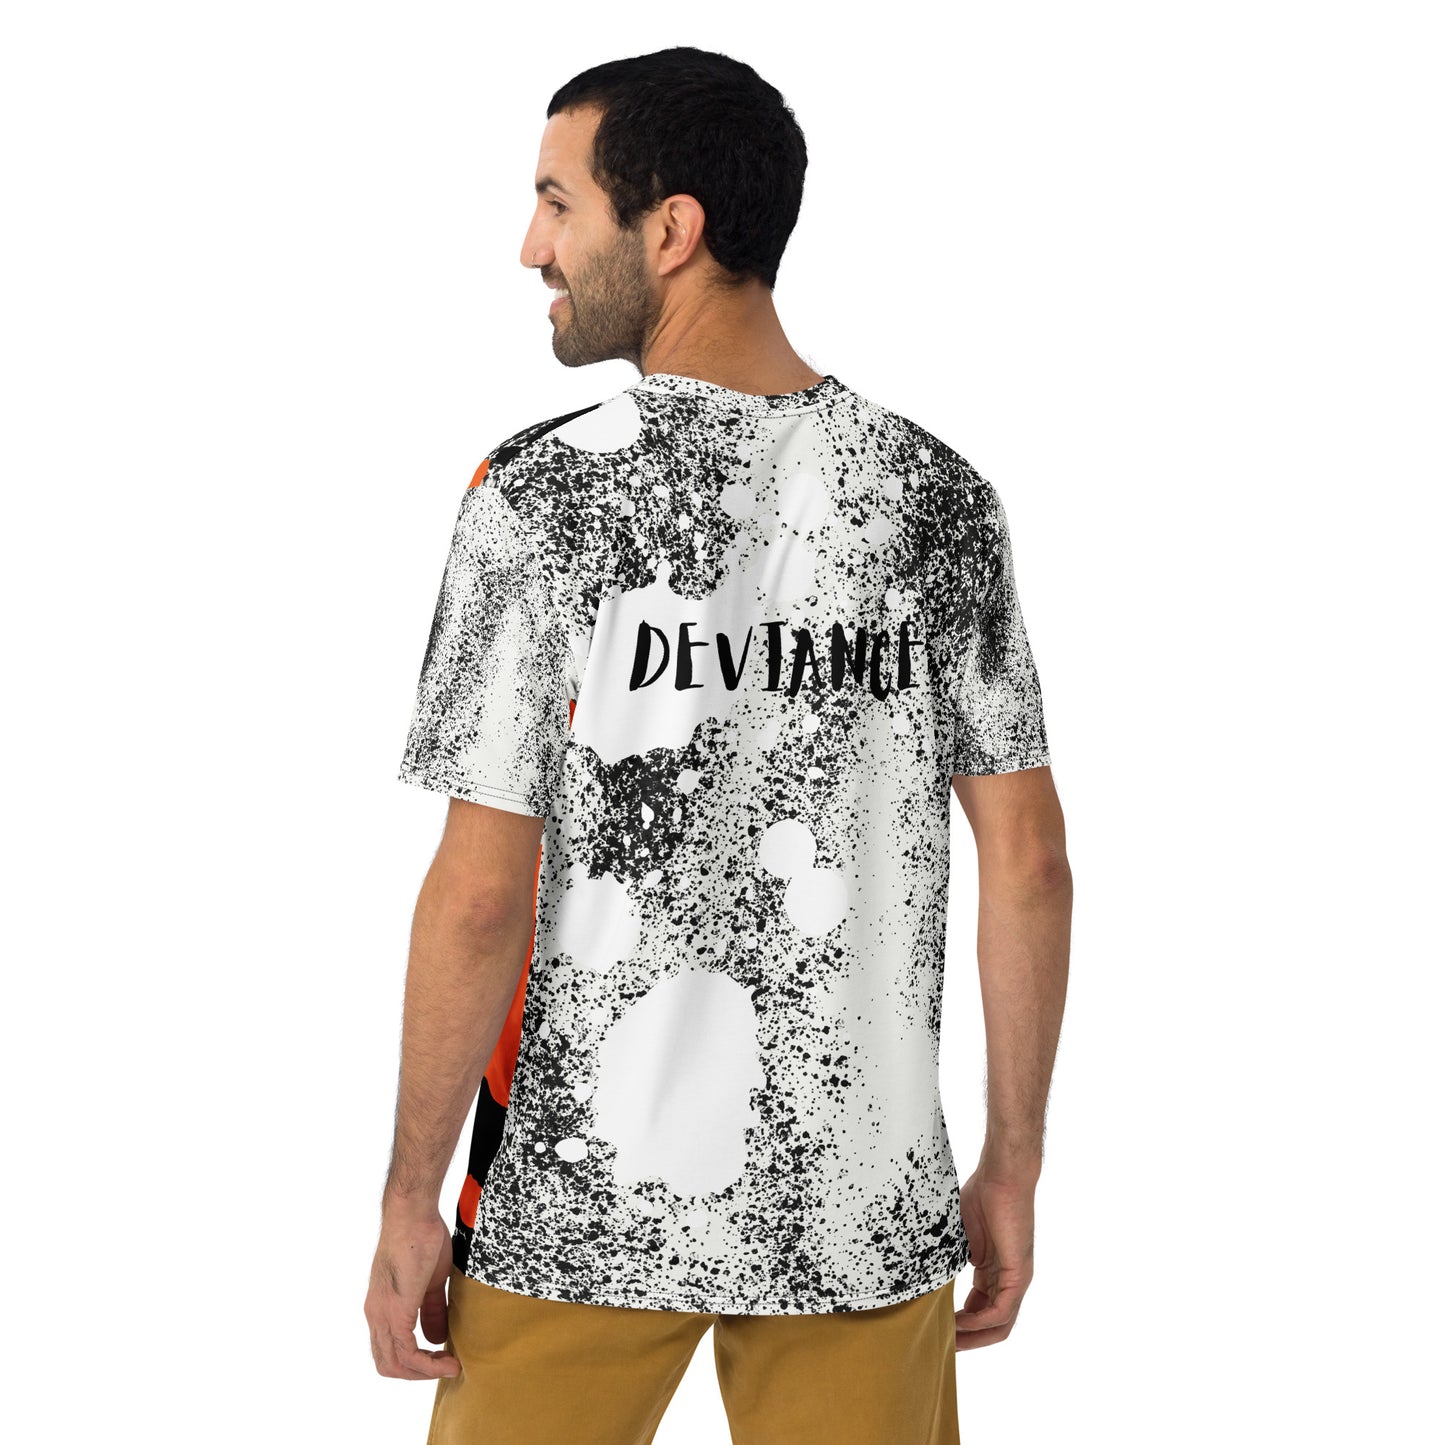 4 panel orange Deviance t-shirt